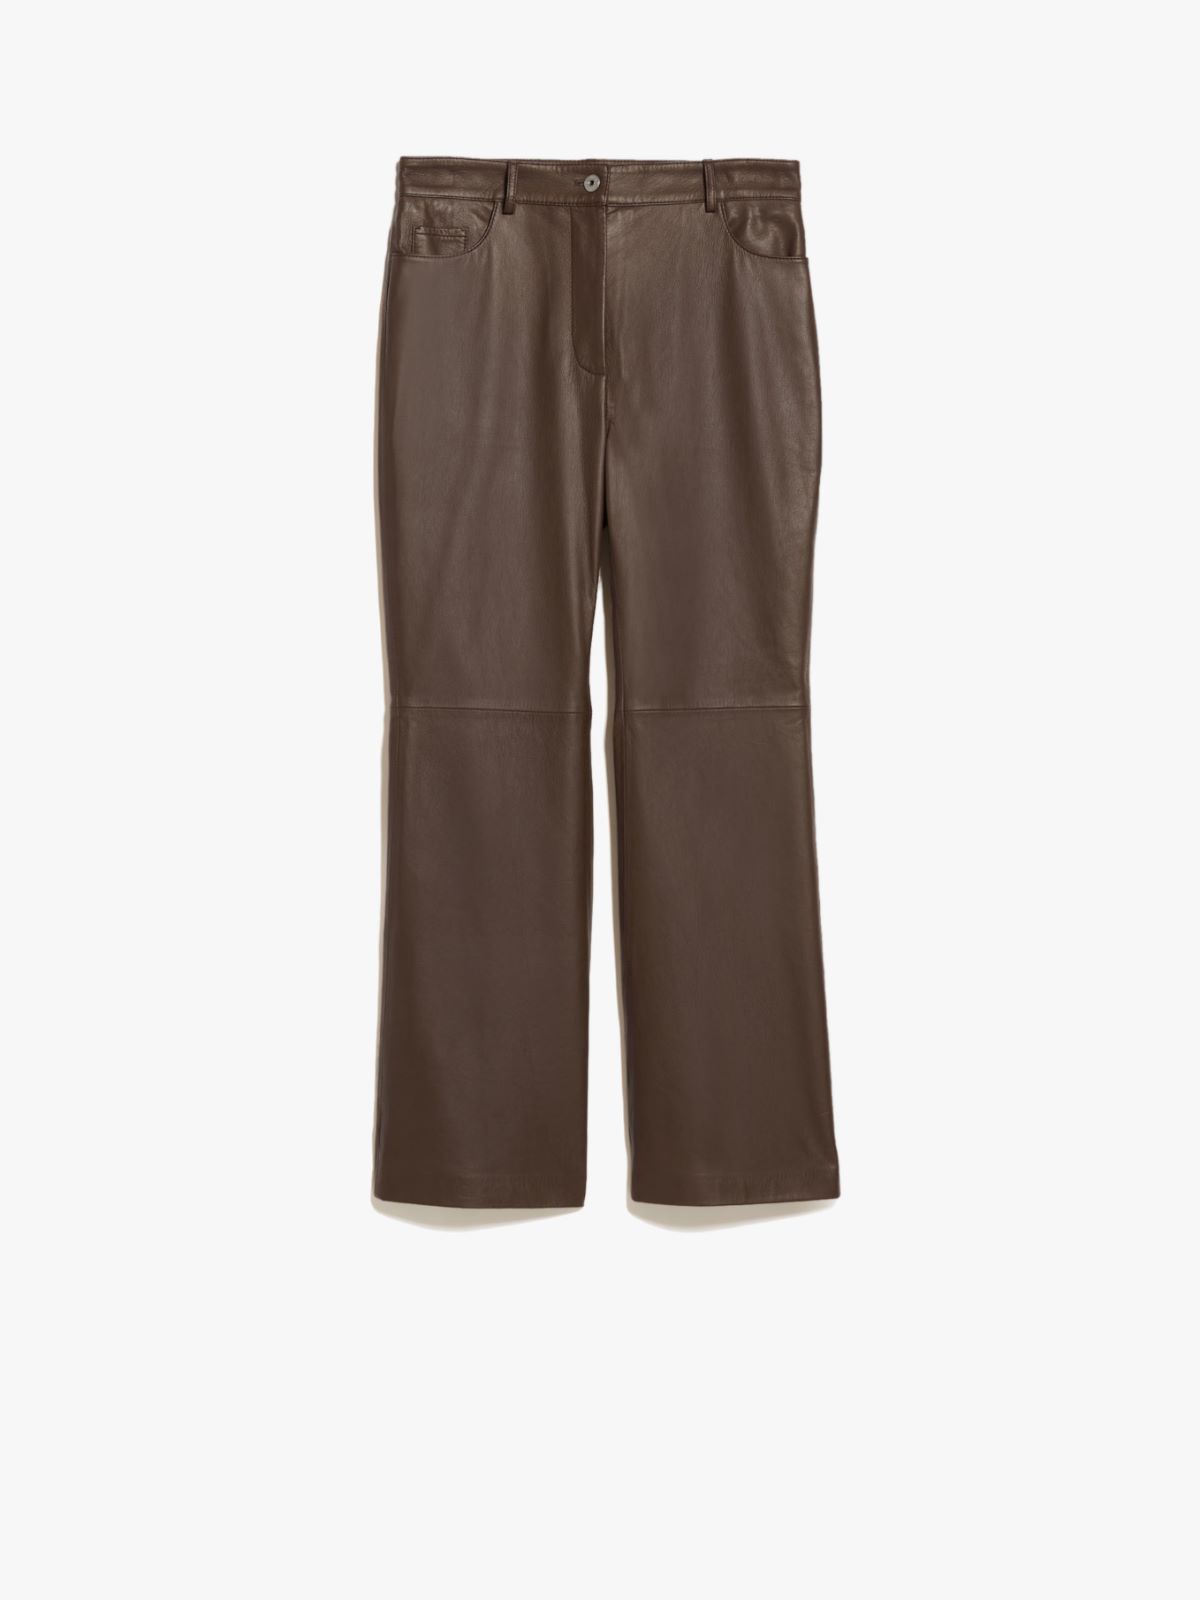 Flared Nappa leather trousers - CHOCOLATE - Weekend Max Mara - 5